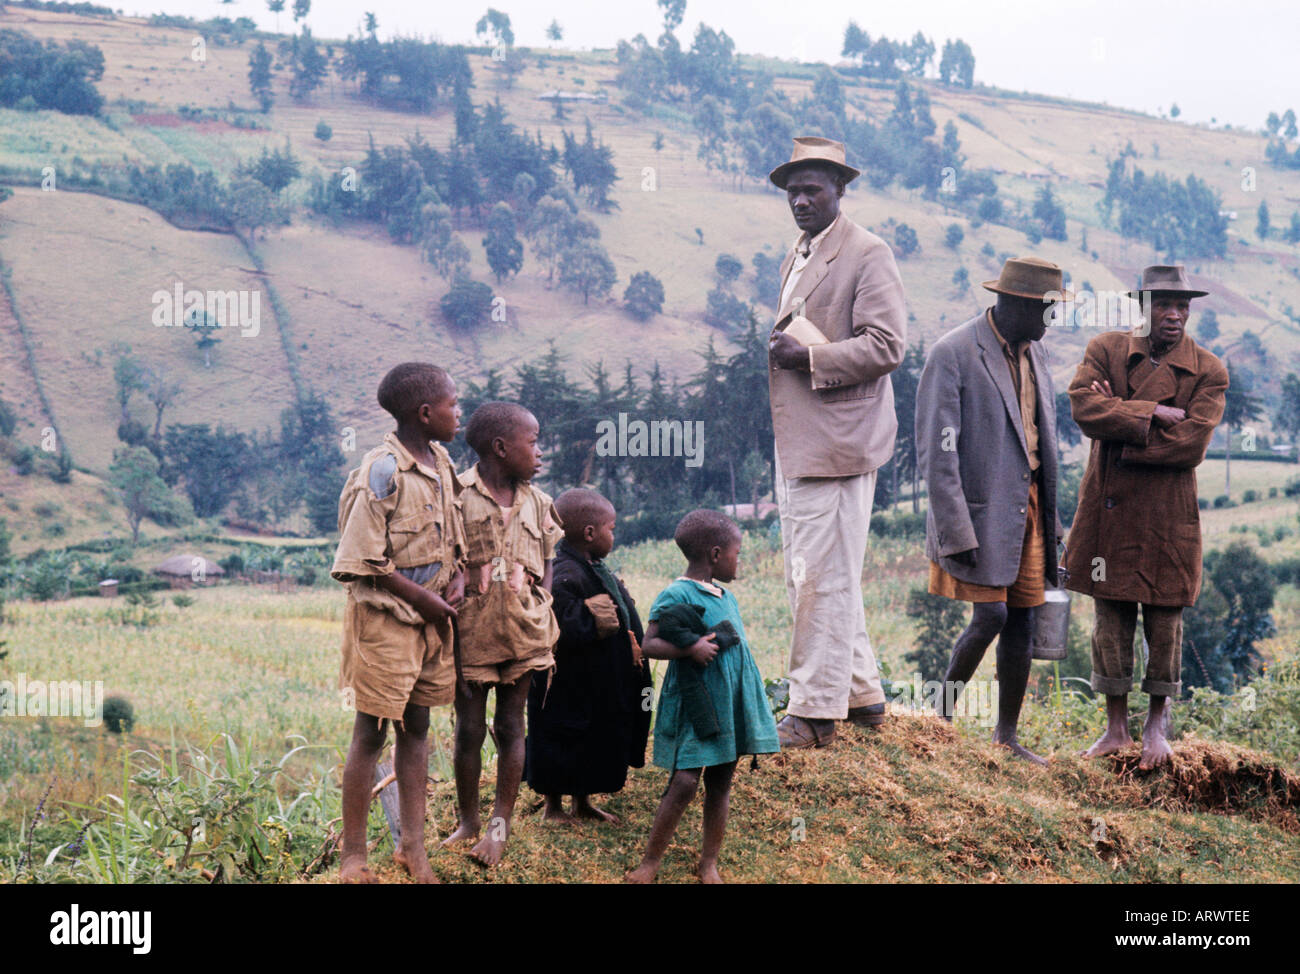 https://c8.alamy.com/comp/ARWTEE/farmers-and-children-in-a-kikuyu-farm-landscape-near-nairobi-kenya-ARWTEE.jpg